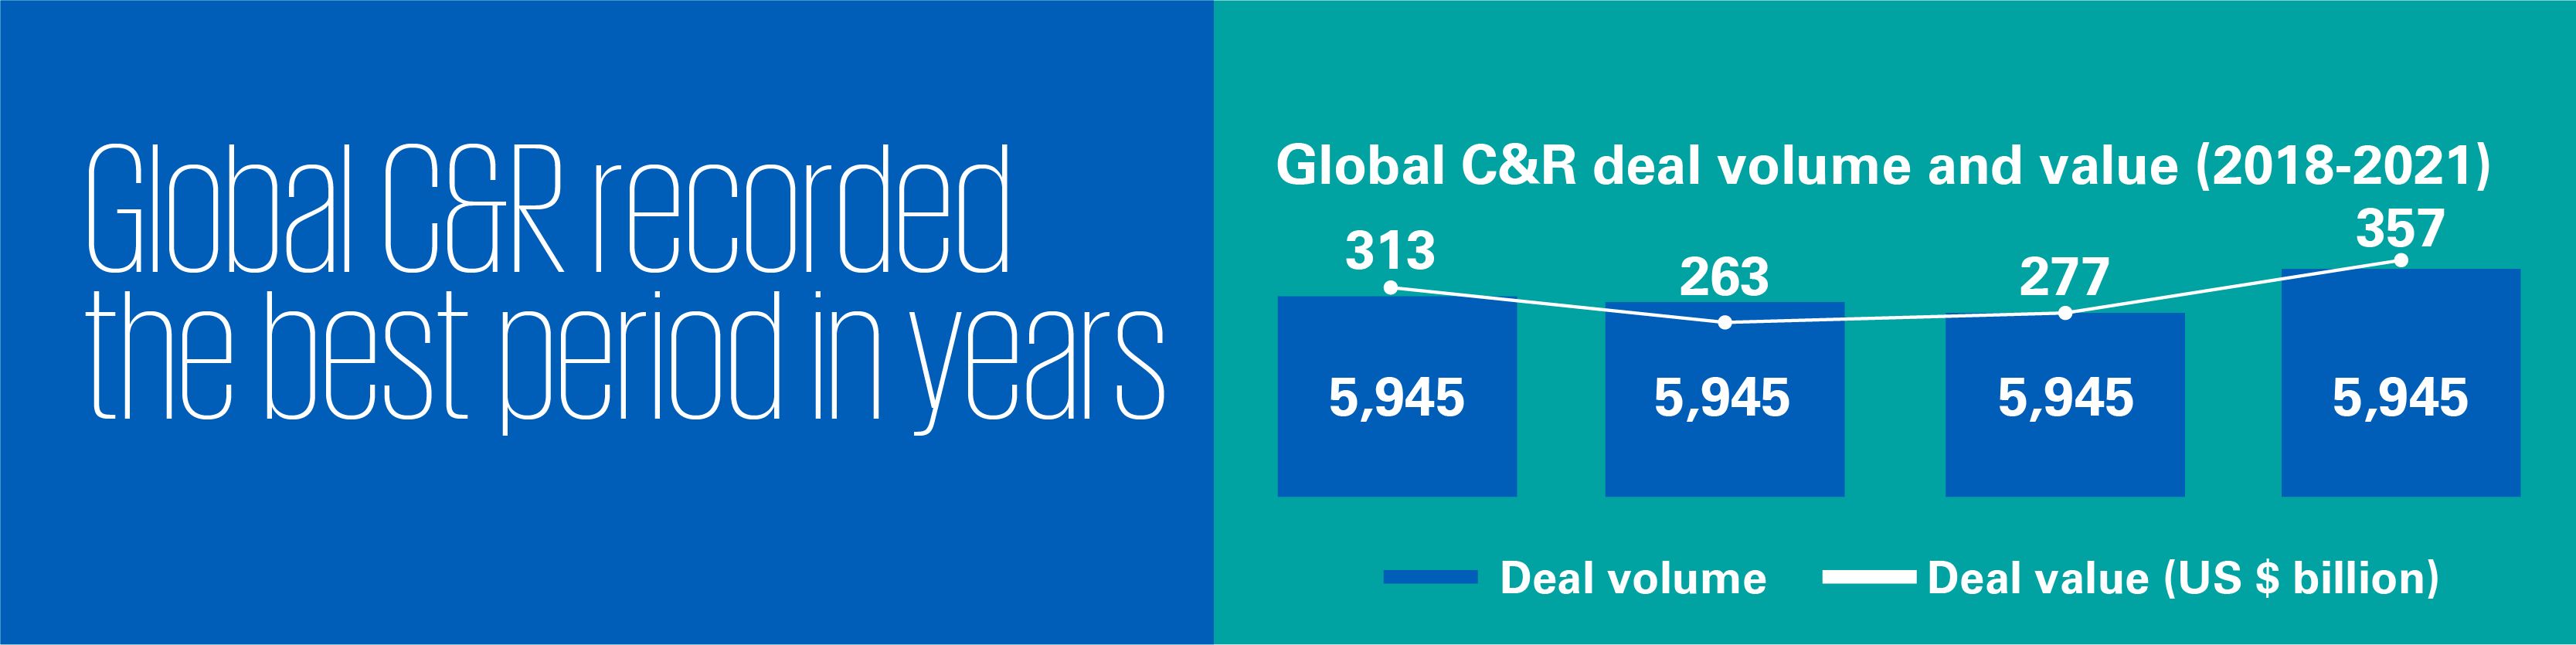 Global C&R deal volume and valie